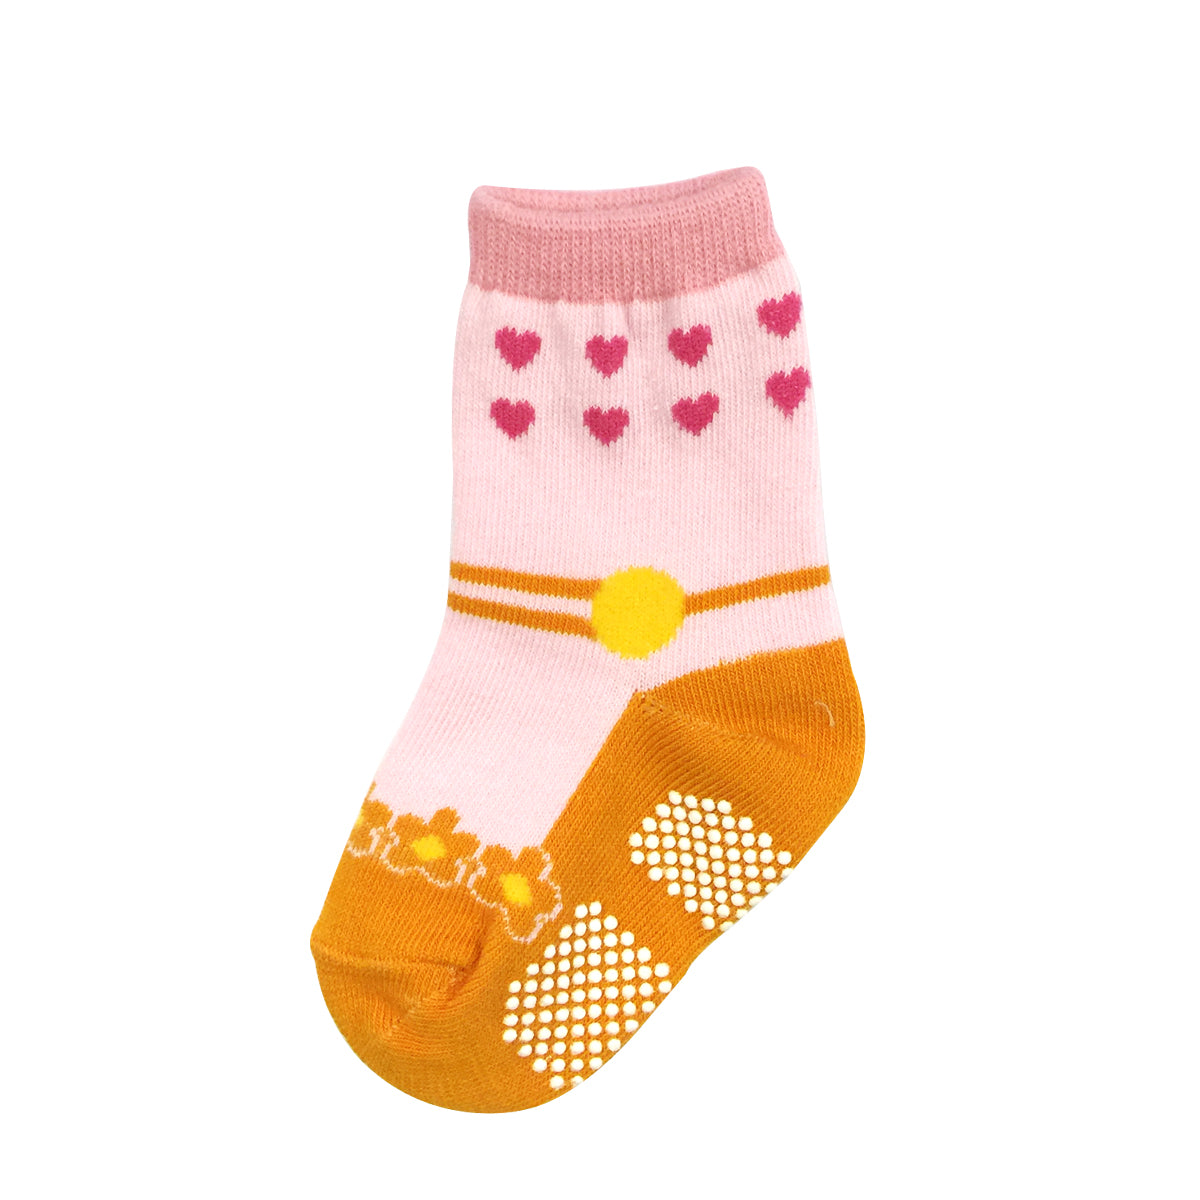 Wrapables Cutie Pie Mary Jane Non-Skid Socks (Set of 6), Set 1